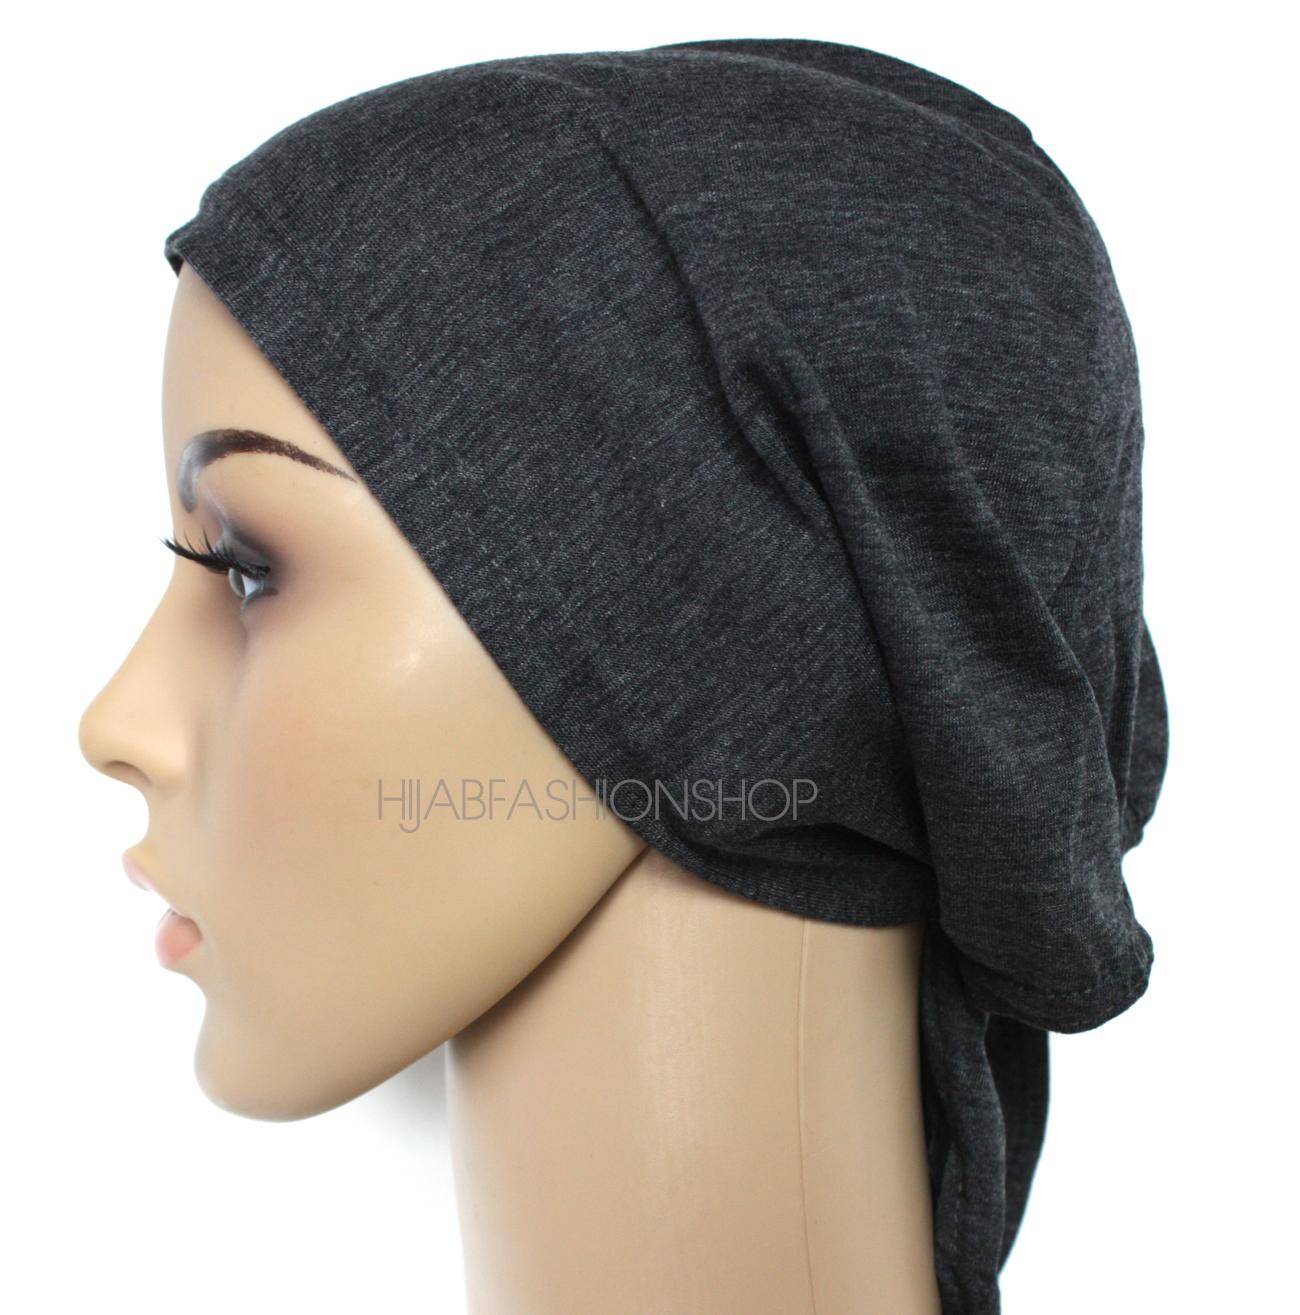 heather black string bonnet